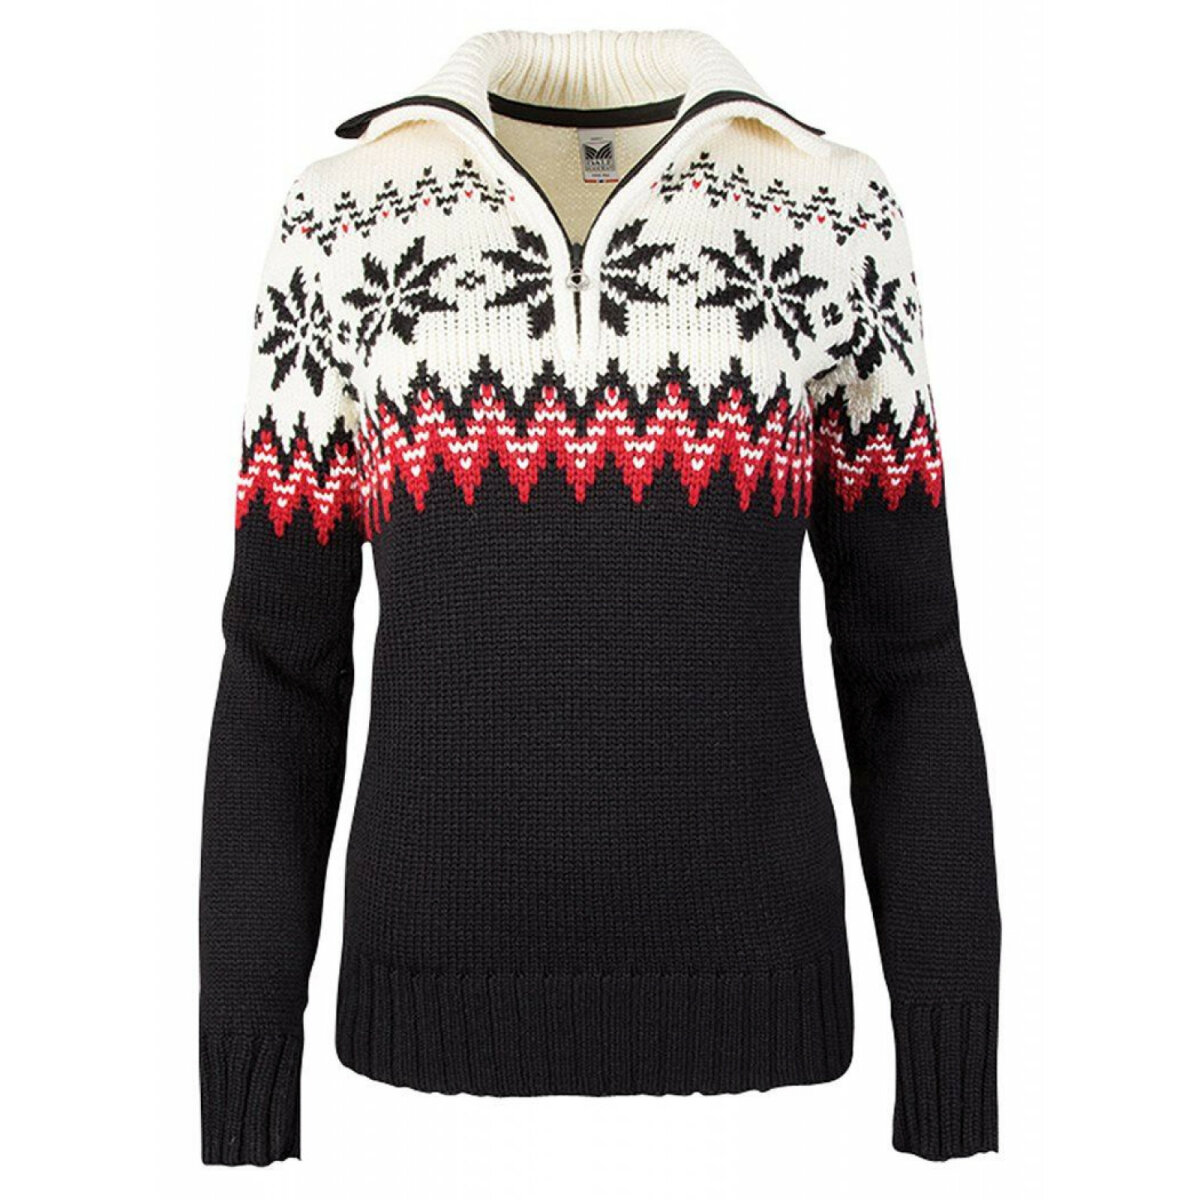 Myking Womens Sweater Black by Dale of Norway - COLDSEASON.com, 329,90 €